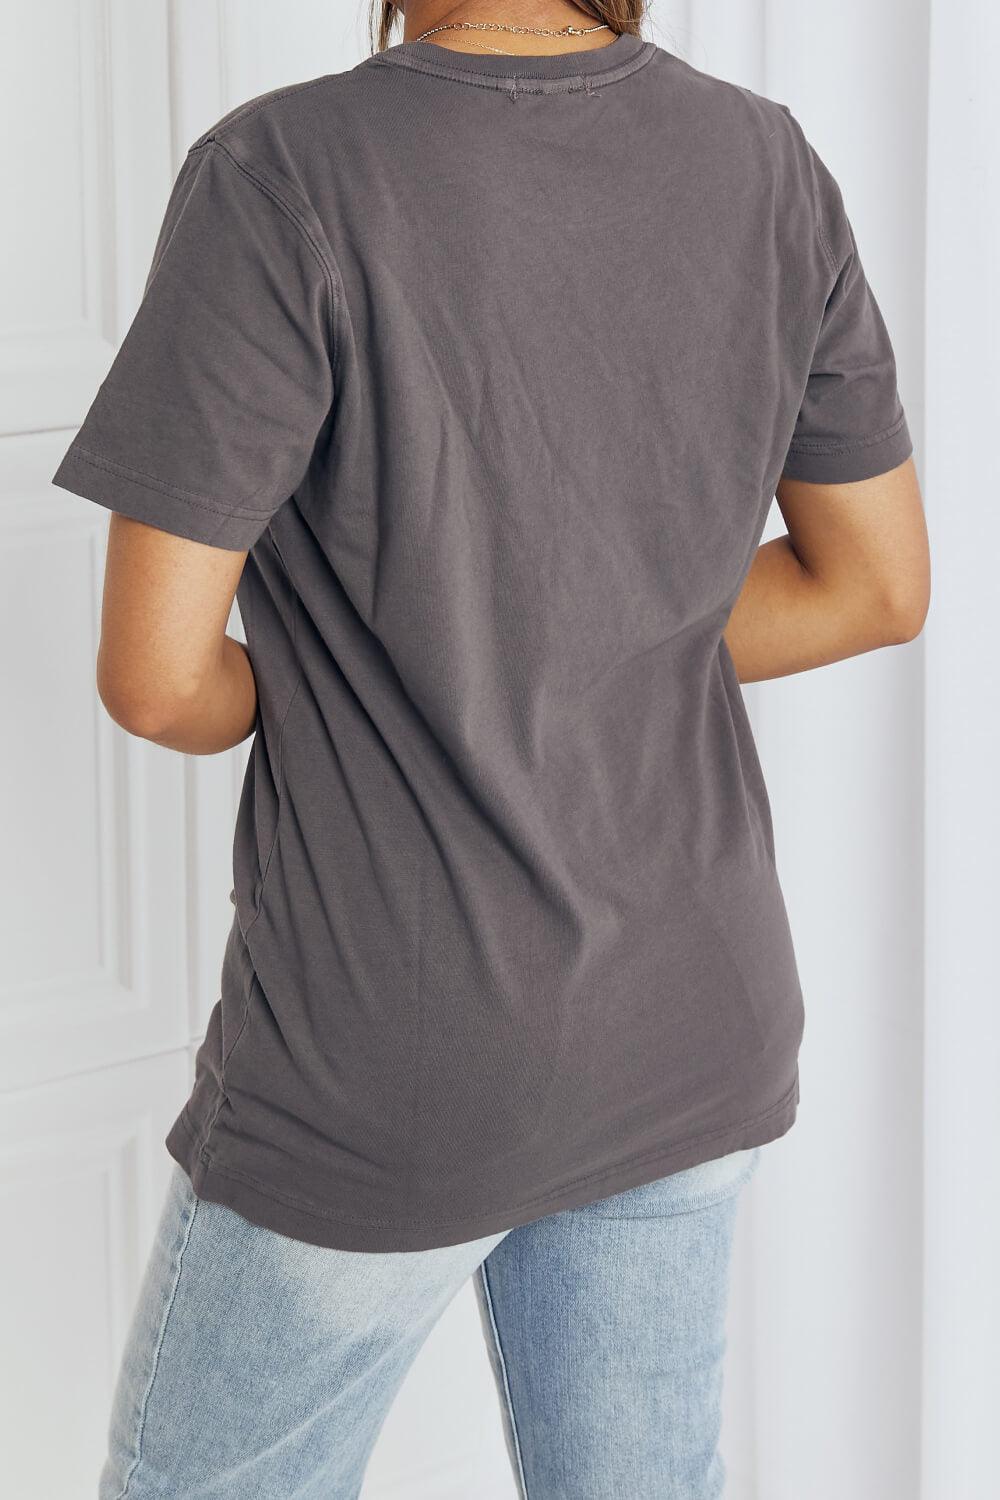 mineB Full Size Eagle Graphic Tee Shirt - BELLATRENDZ